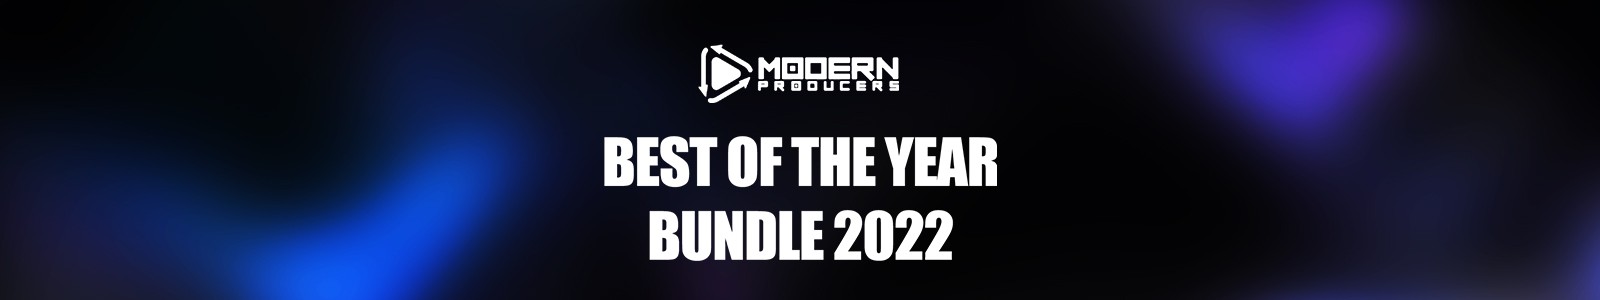 Modern Producers Best of 2022 Producer Bundle